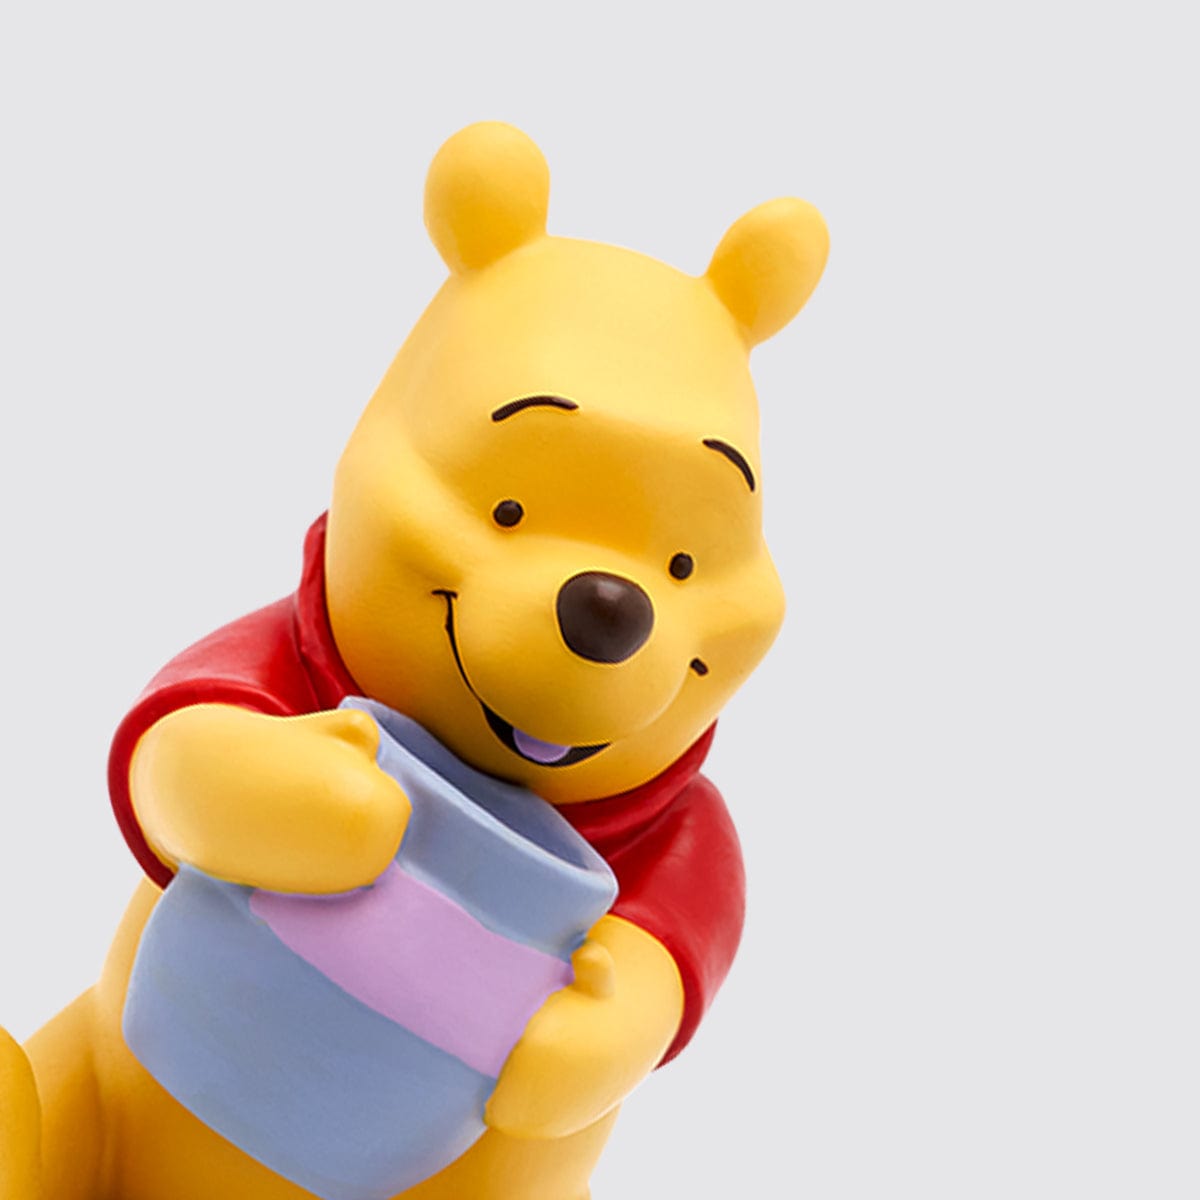 Winniethe Pooh